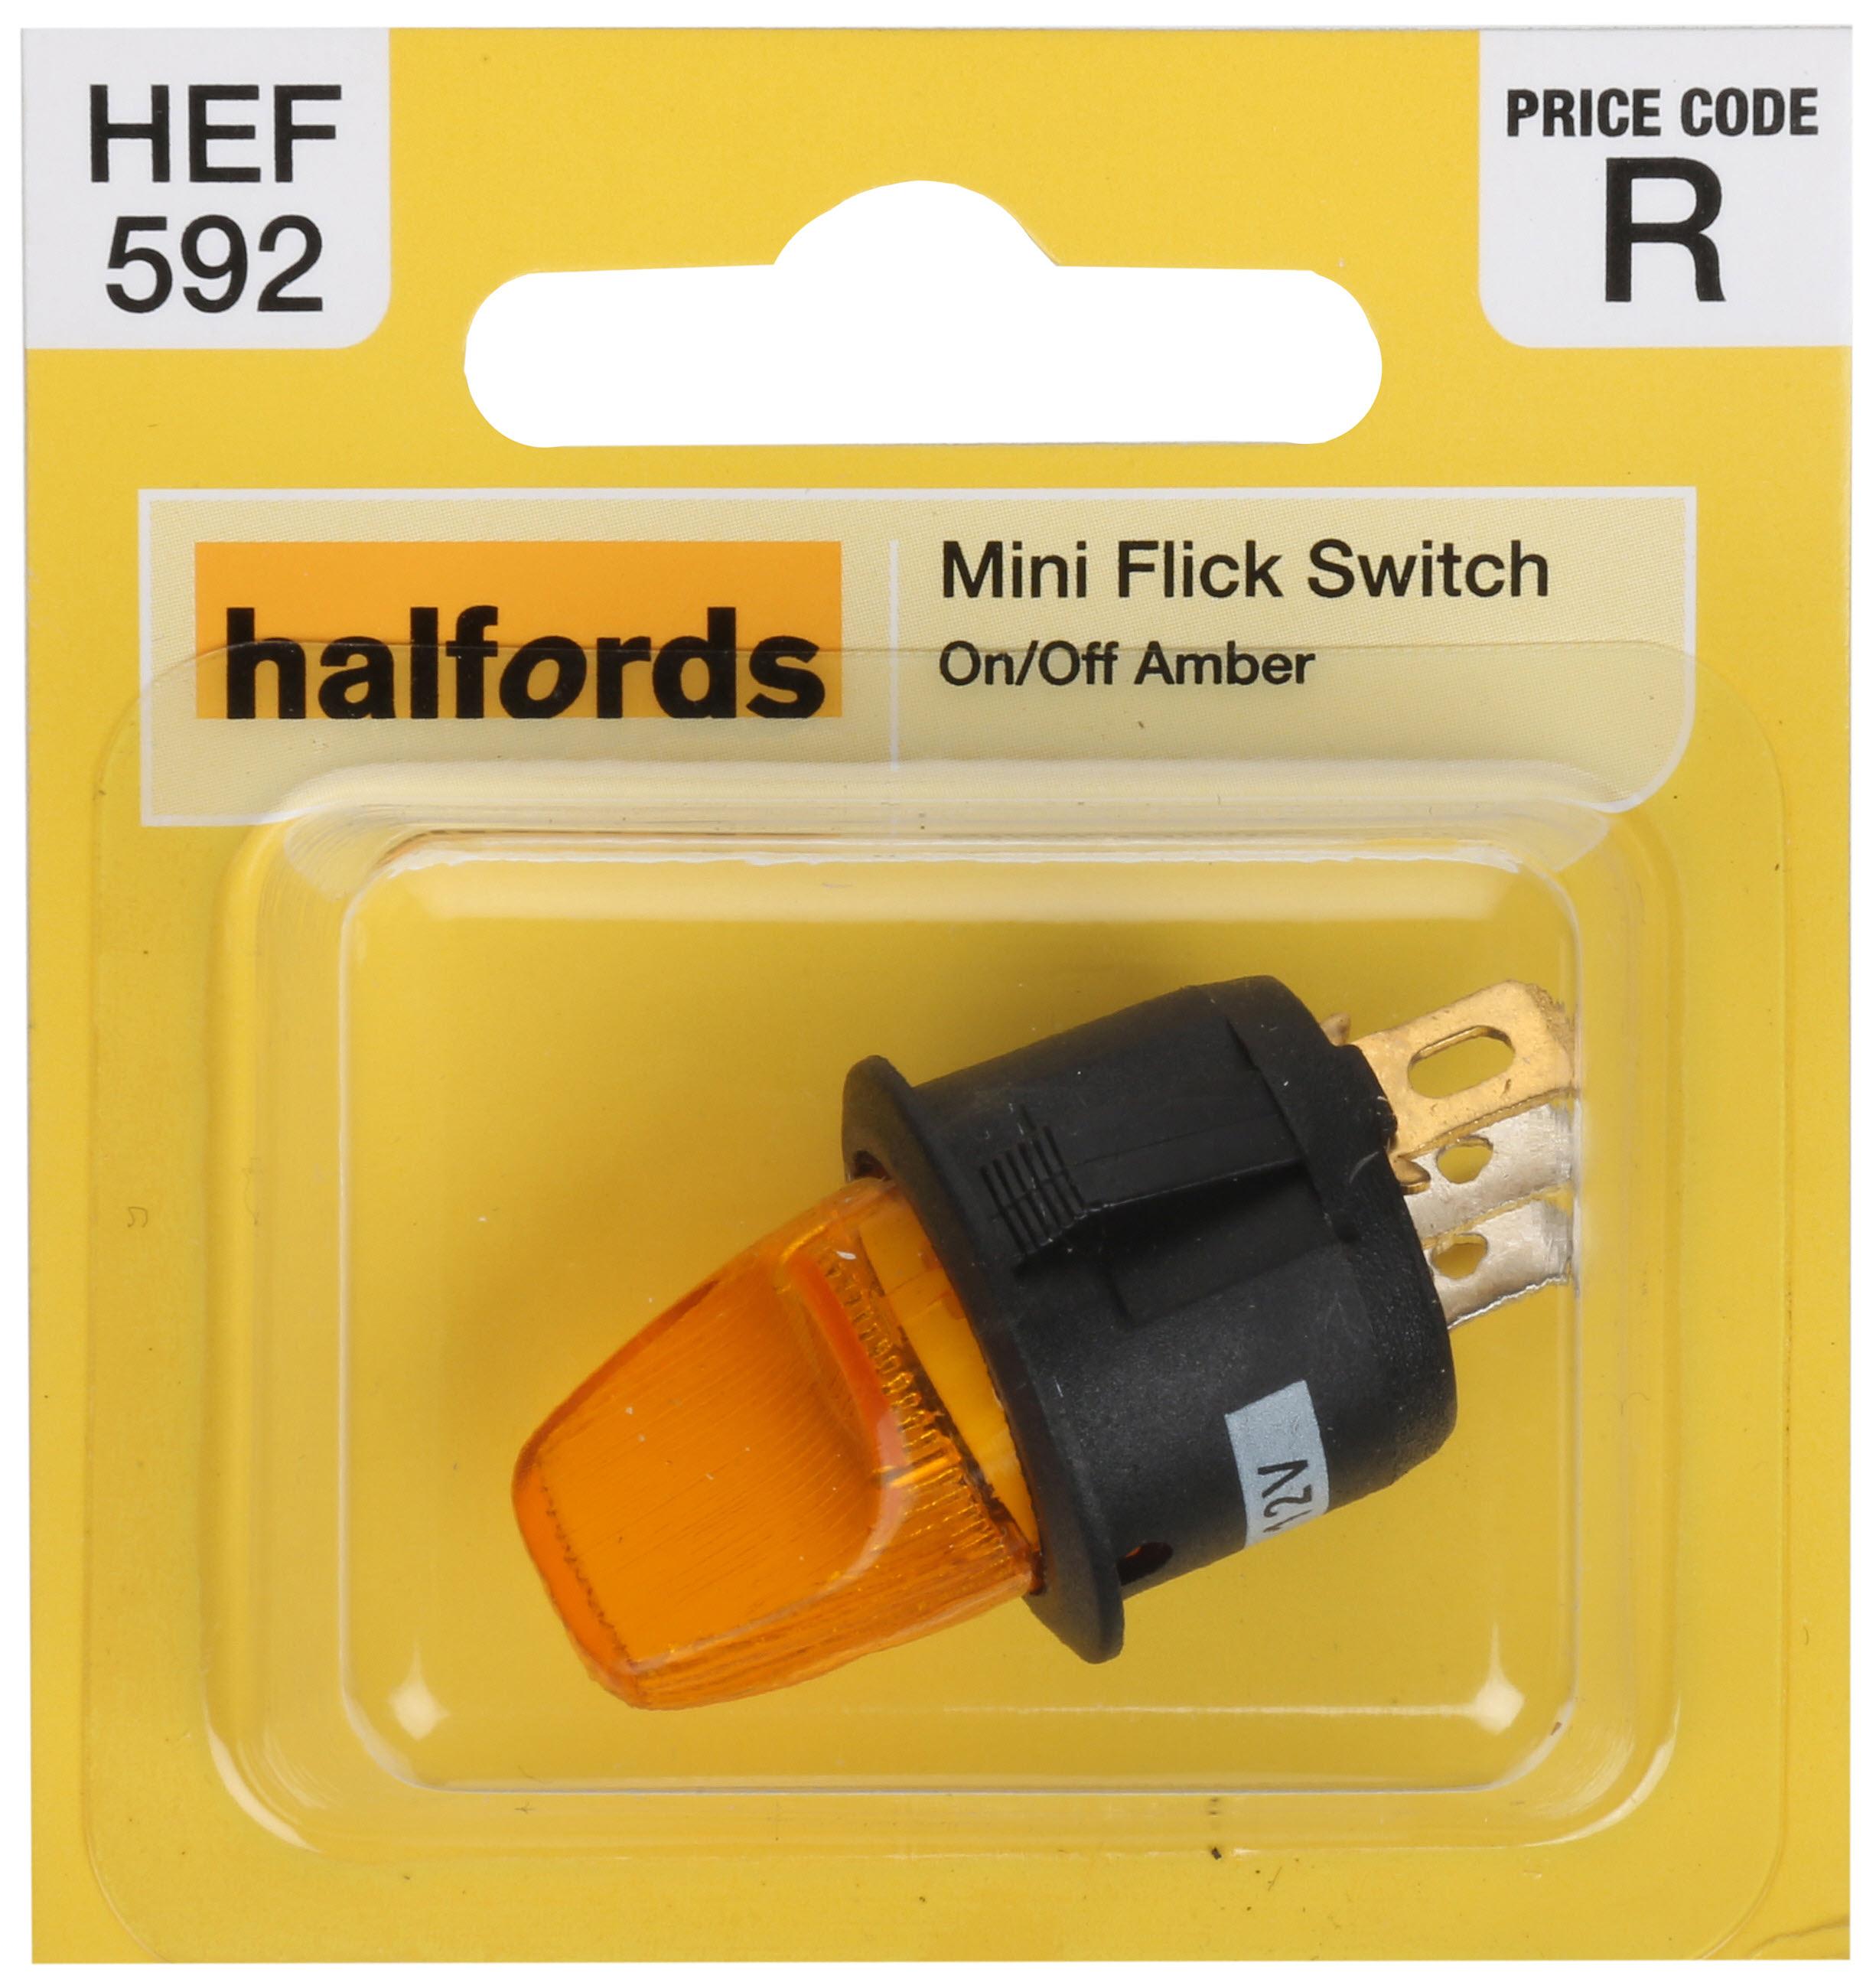 Halfords Mini Flick Switch On/Off Illuminated Amber (Hef592)